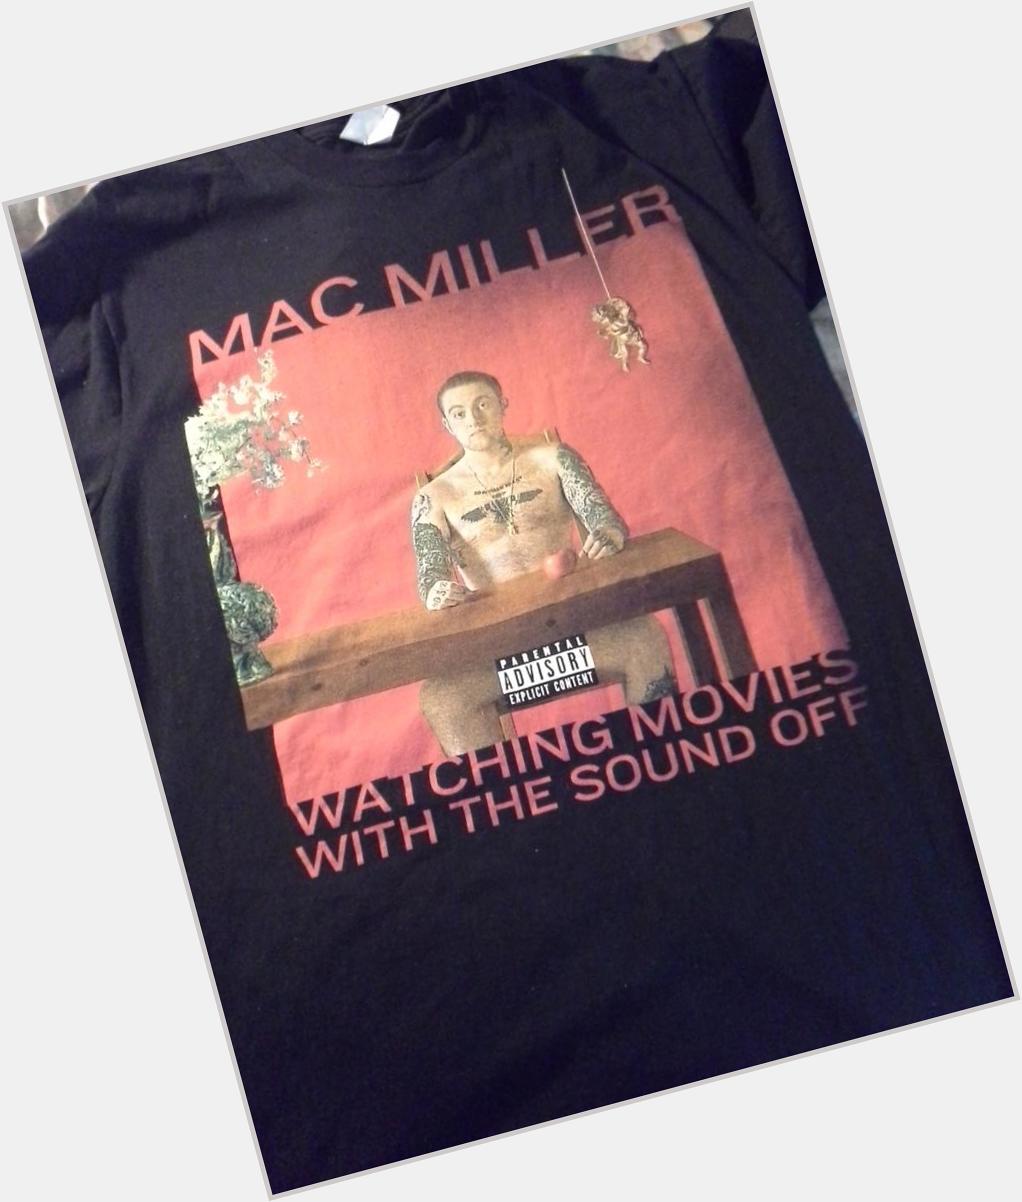 I\m going to wear my Mac Miller shirt to celebrate his birthday! HAPPY BIRTHDAY 